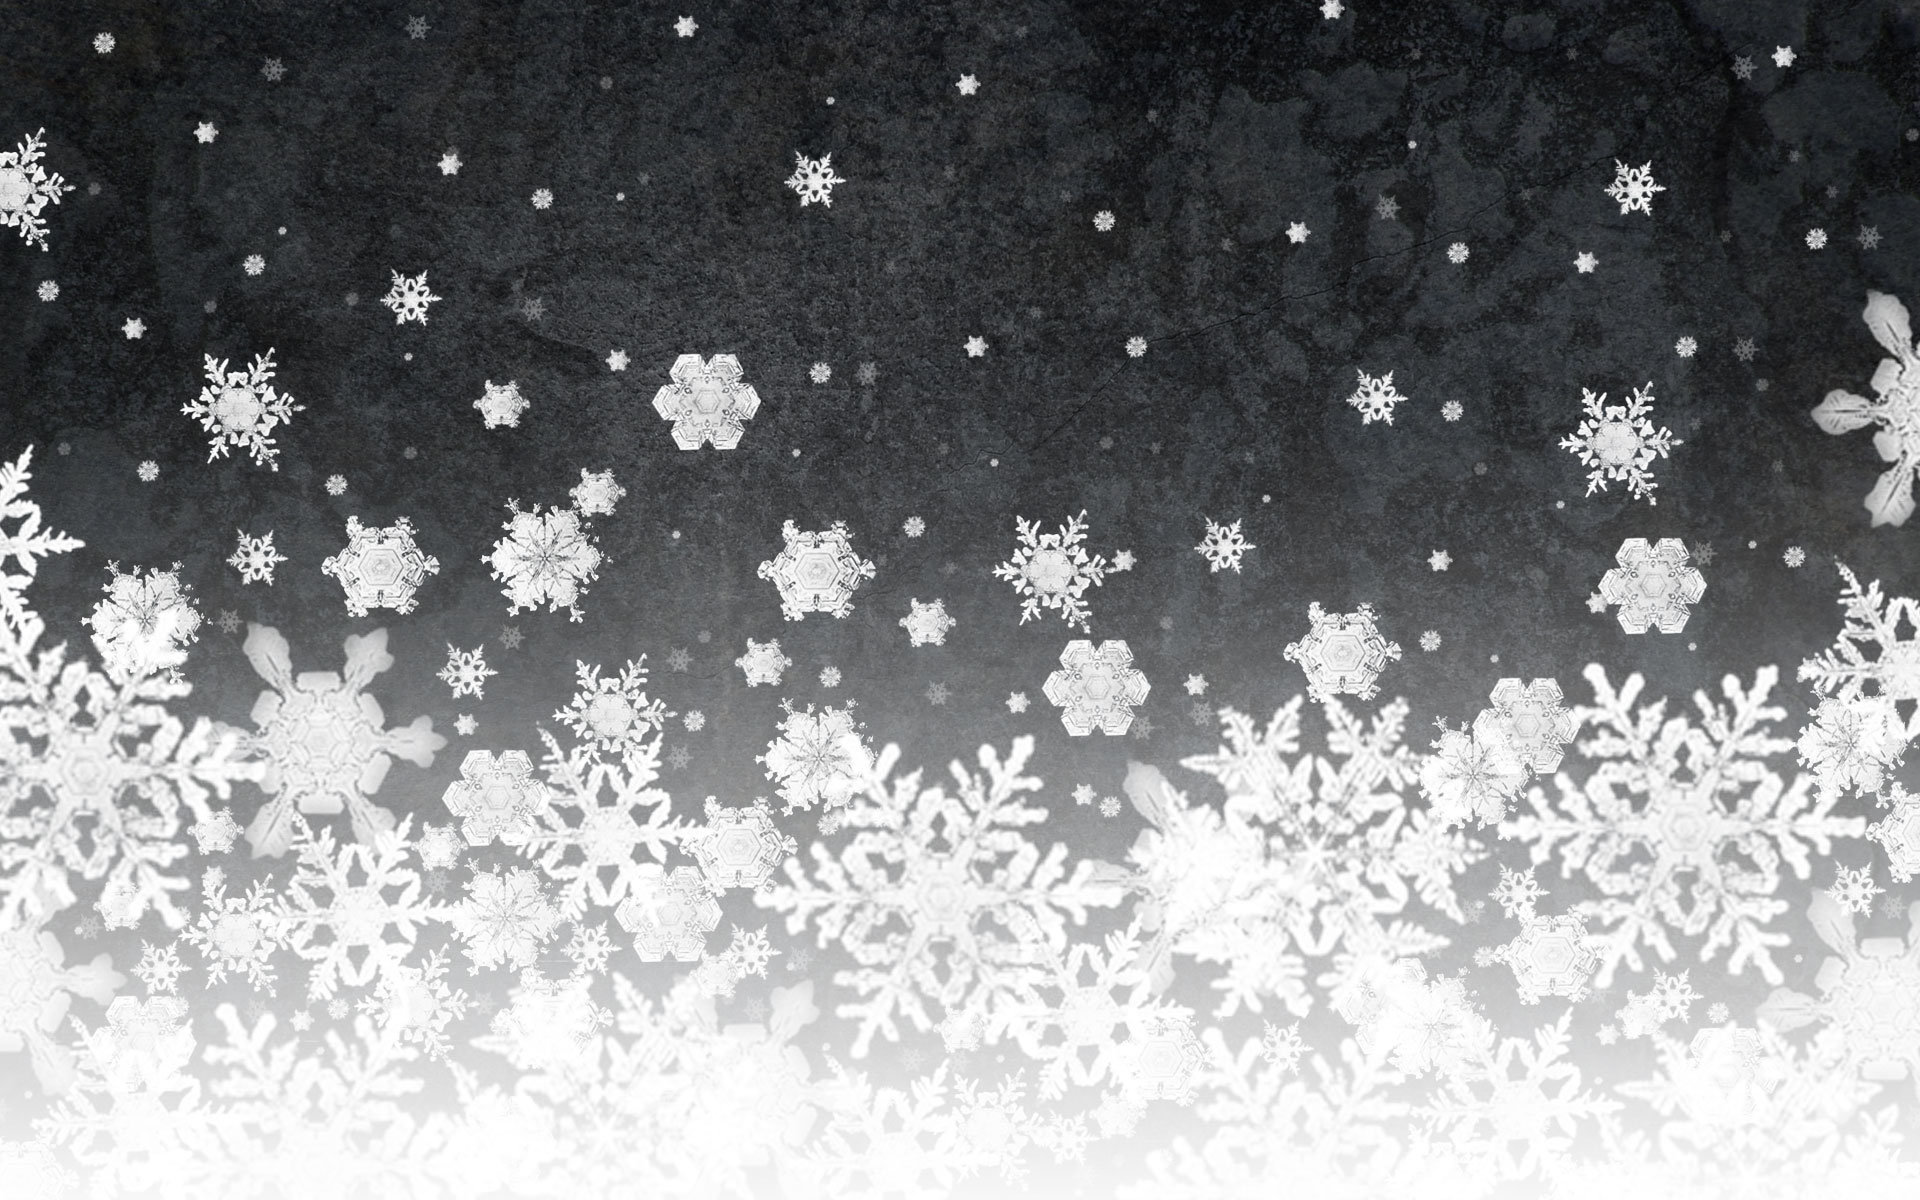 72+] Snow Background Pictures - WallpaperSafari